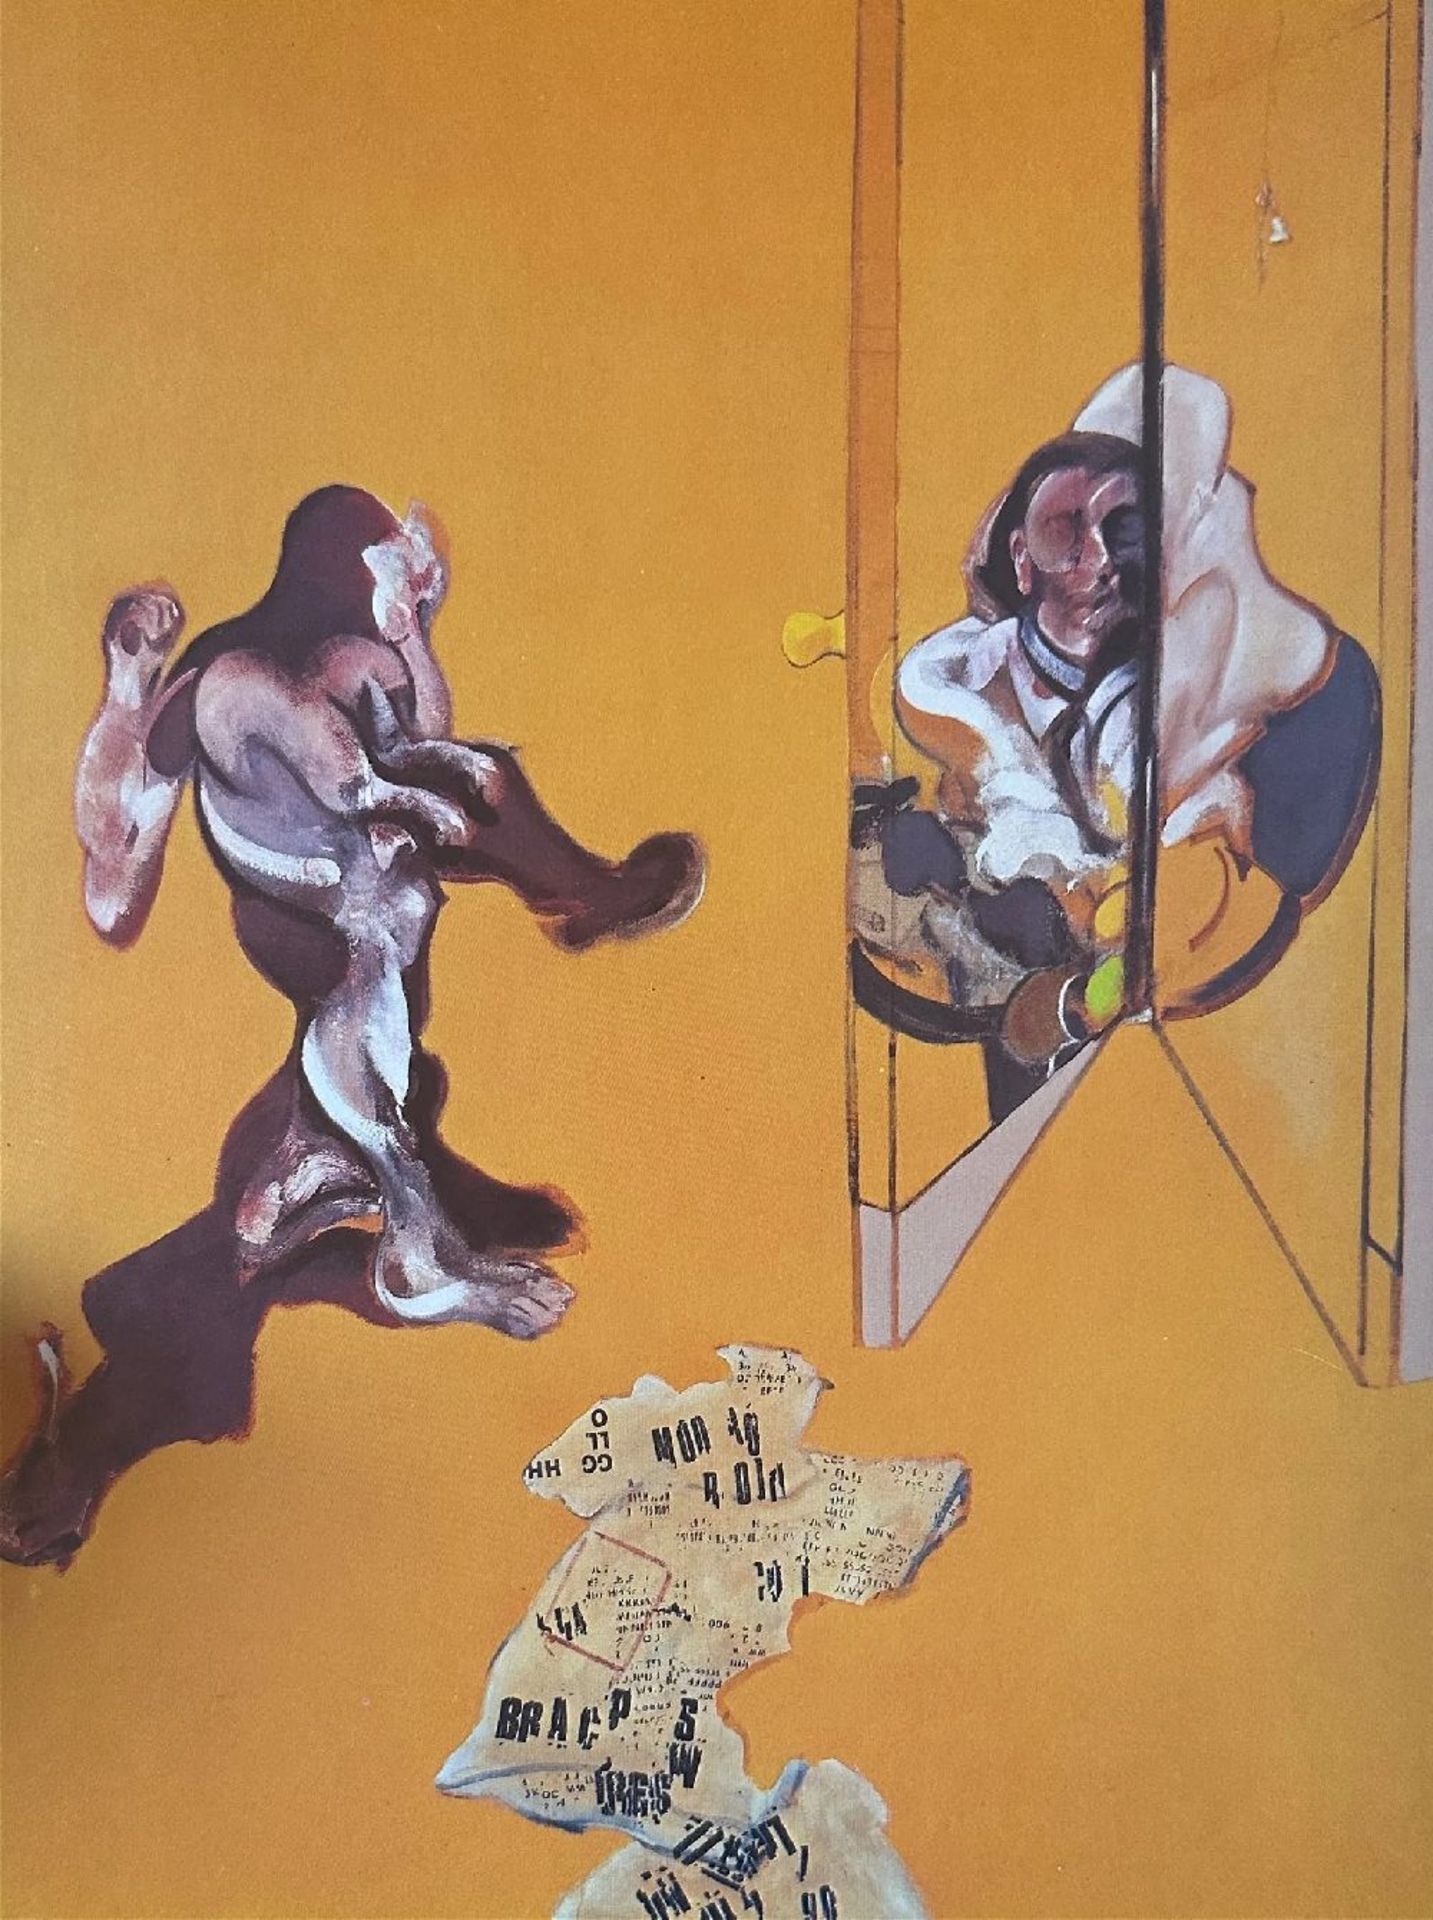 Francis Bacon "1968" Print